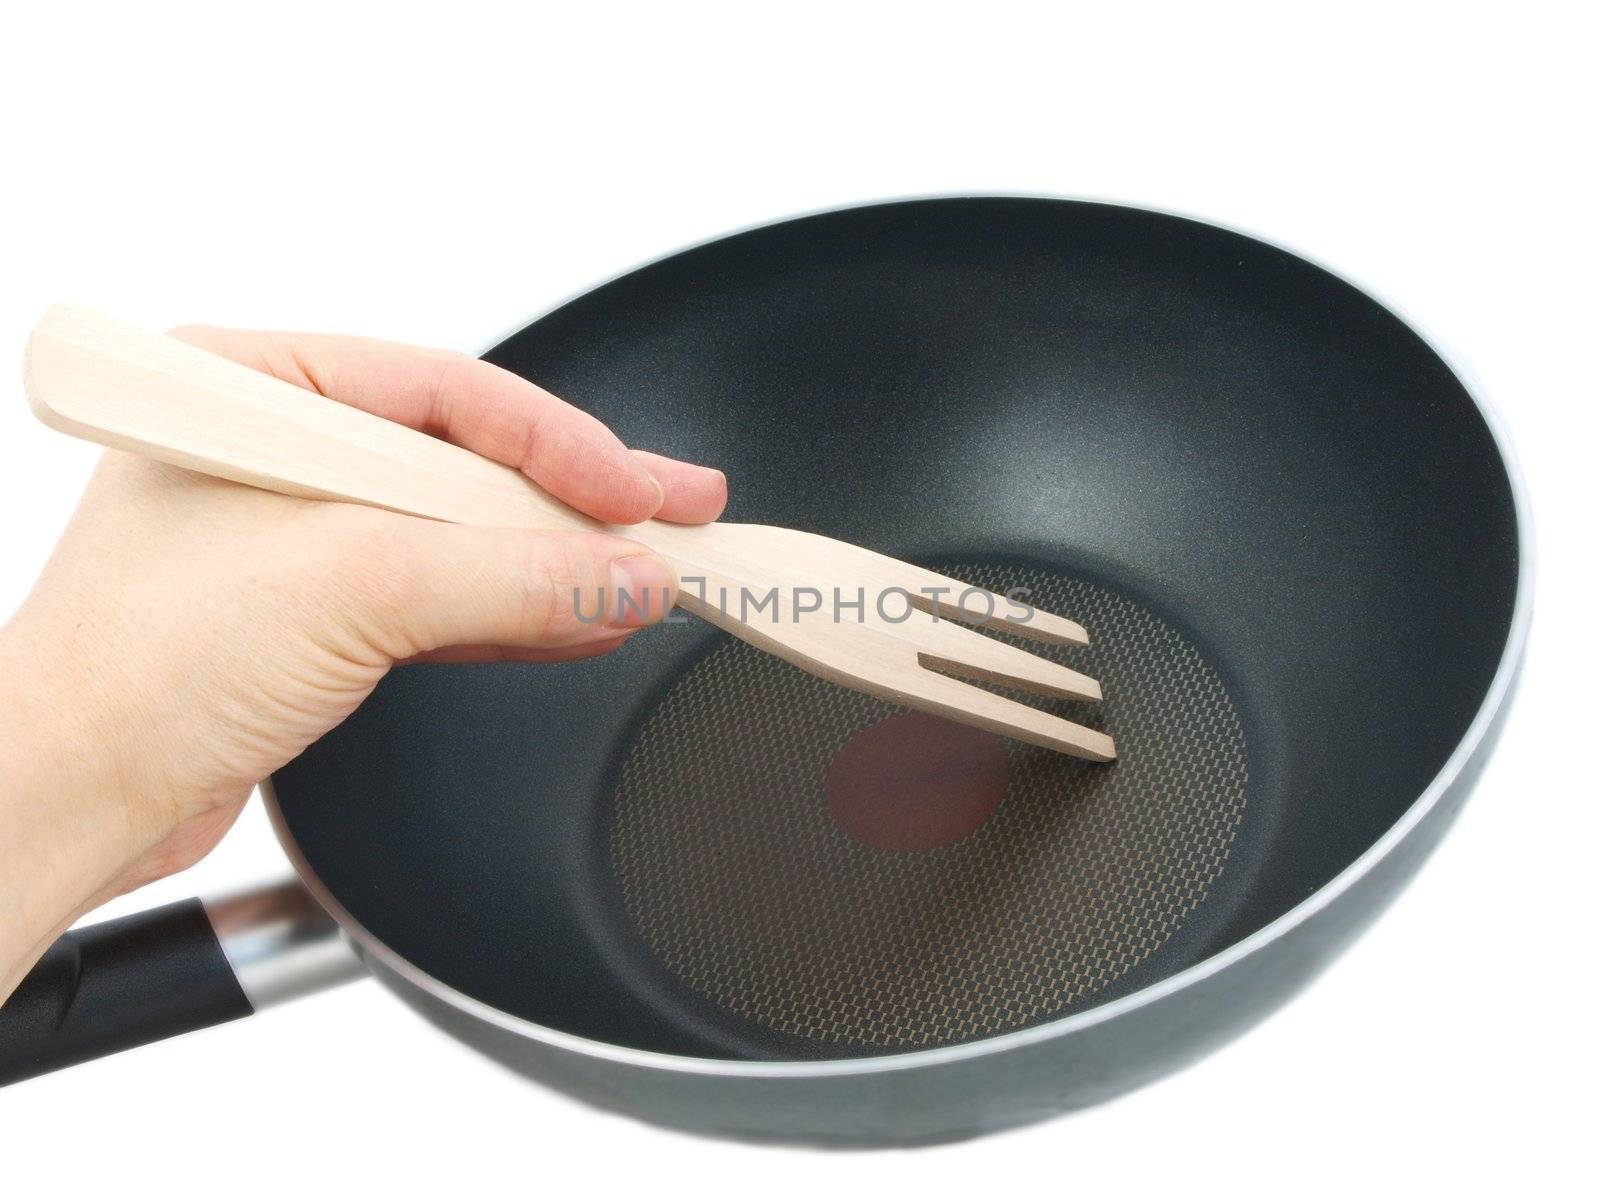 Frying pan by Arvebettum